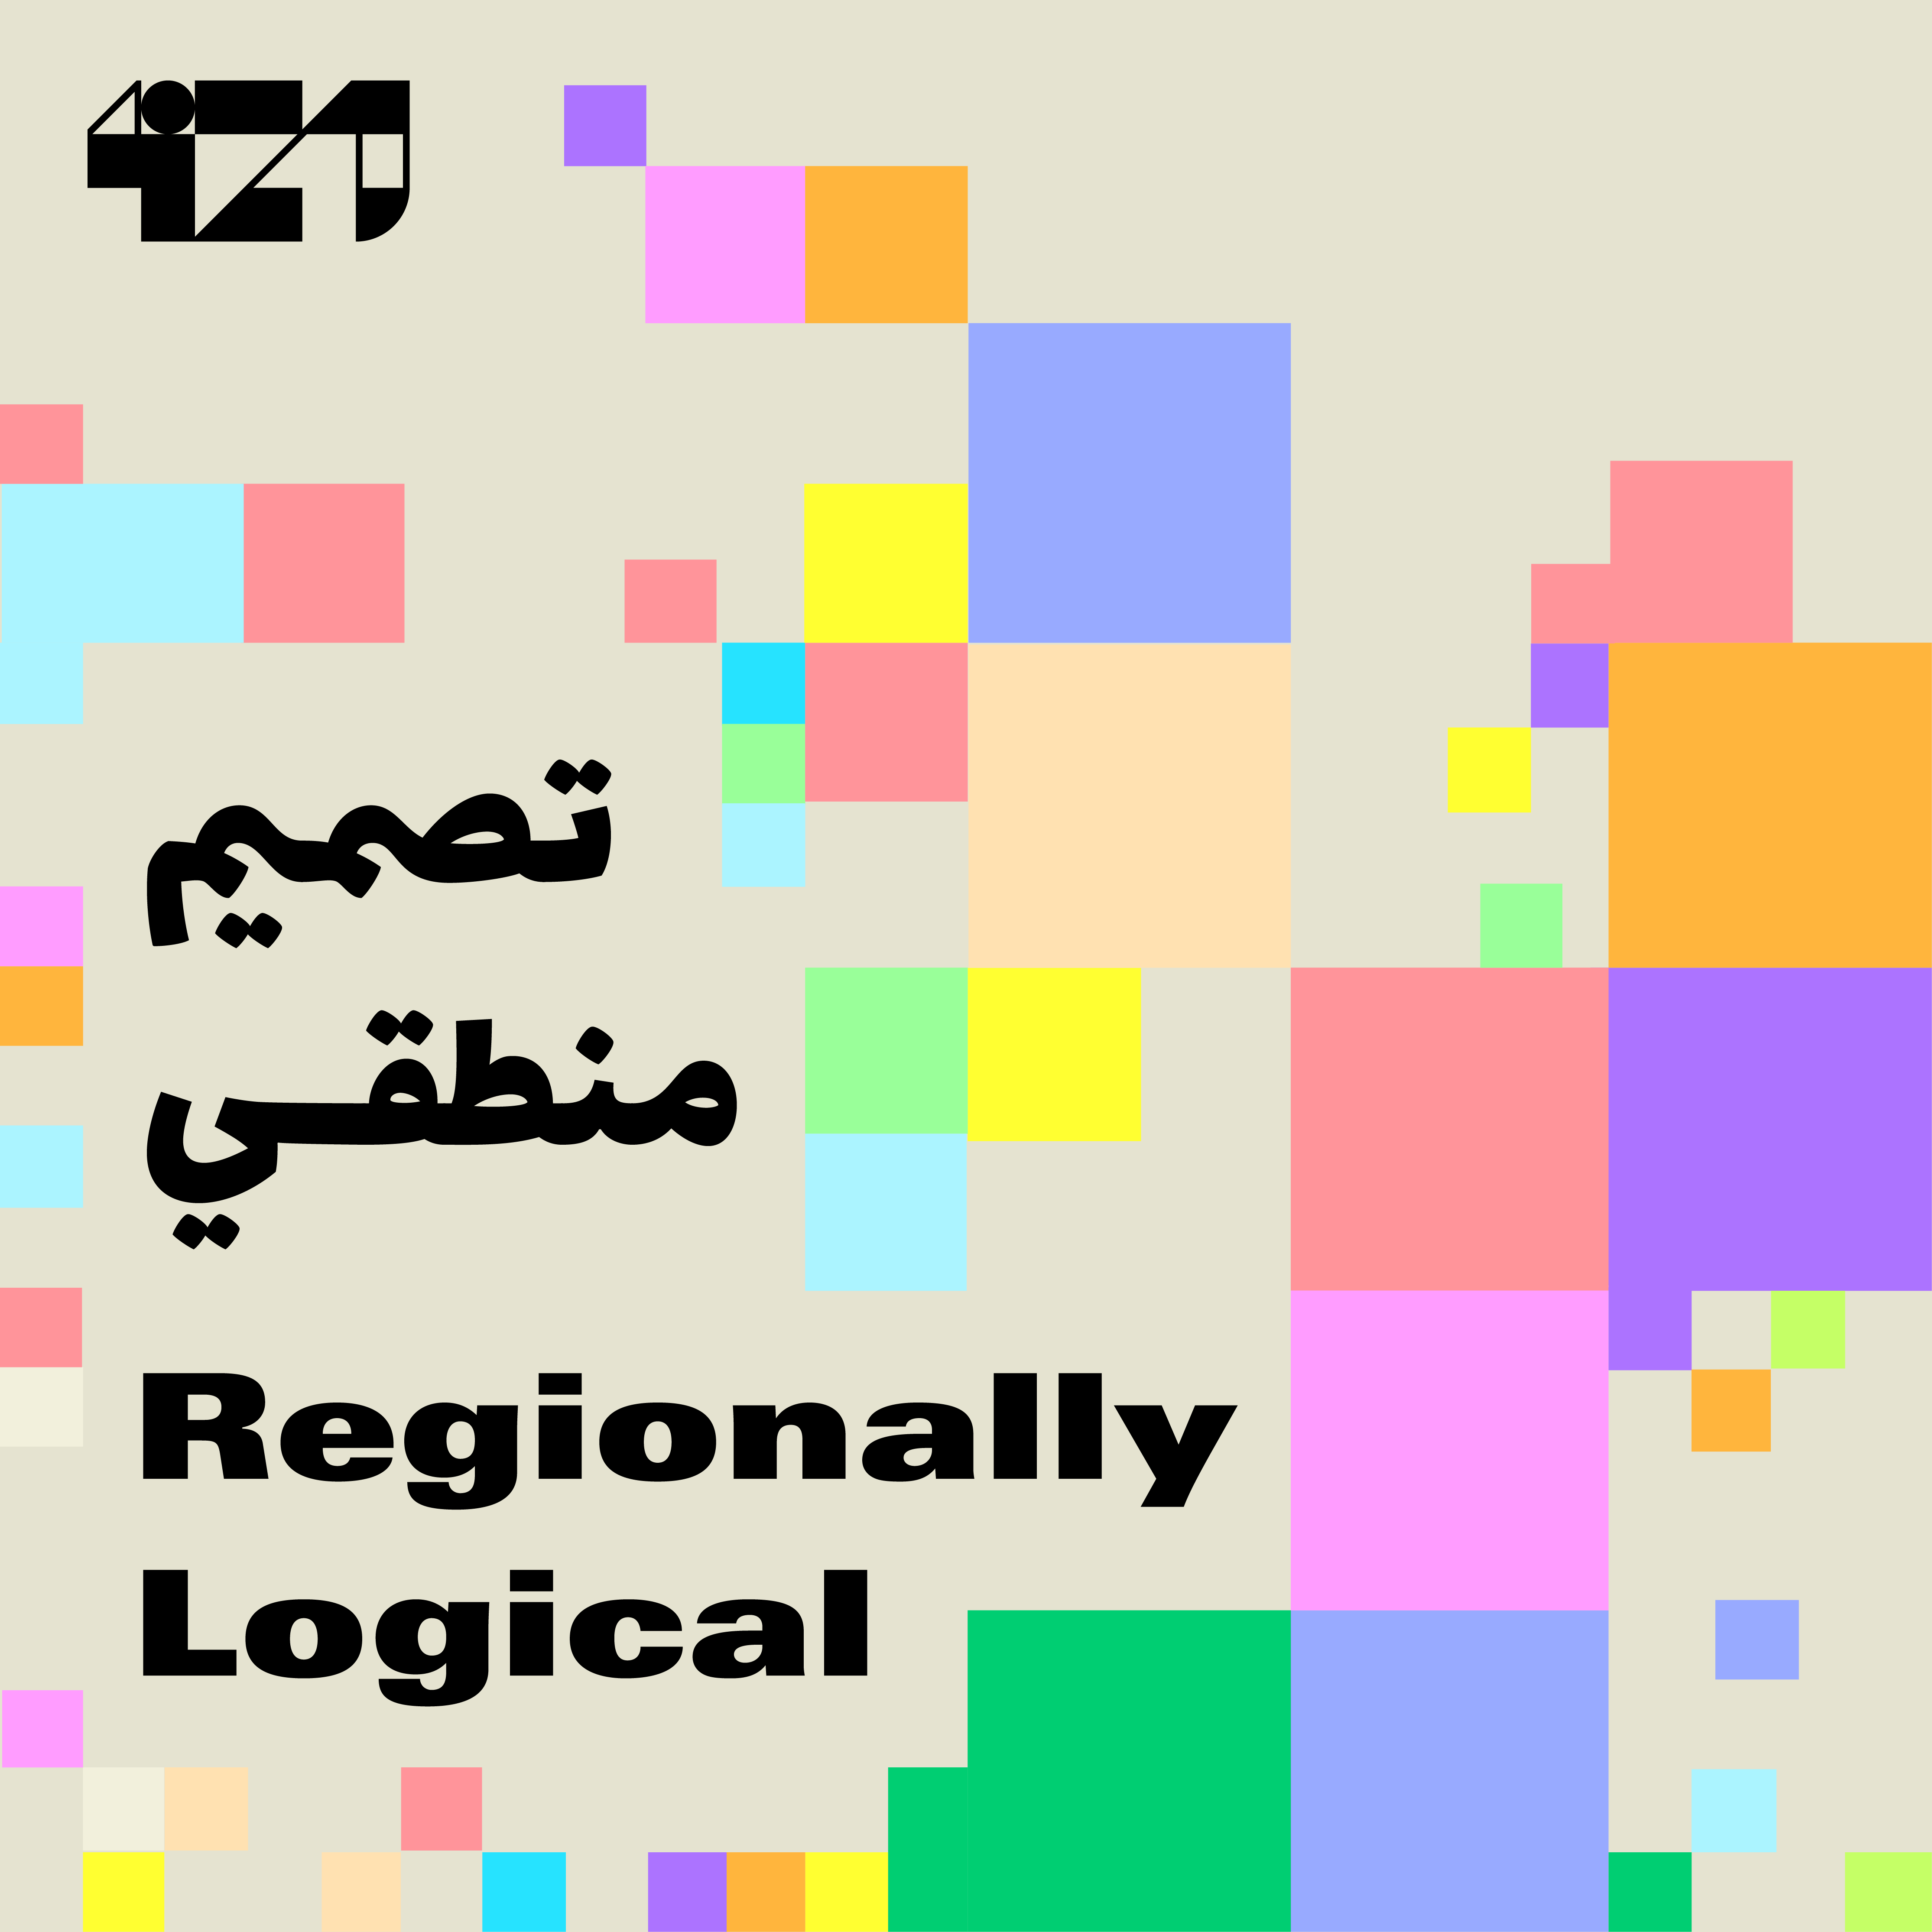 regionally-logically-01-6419d747addbe.png (original)